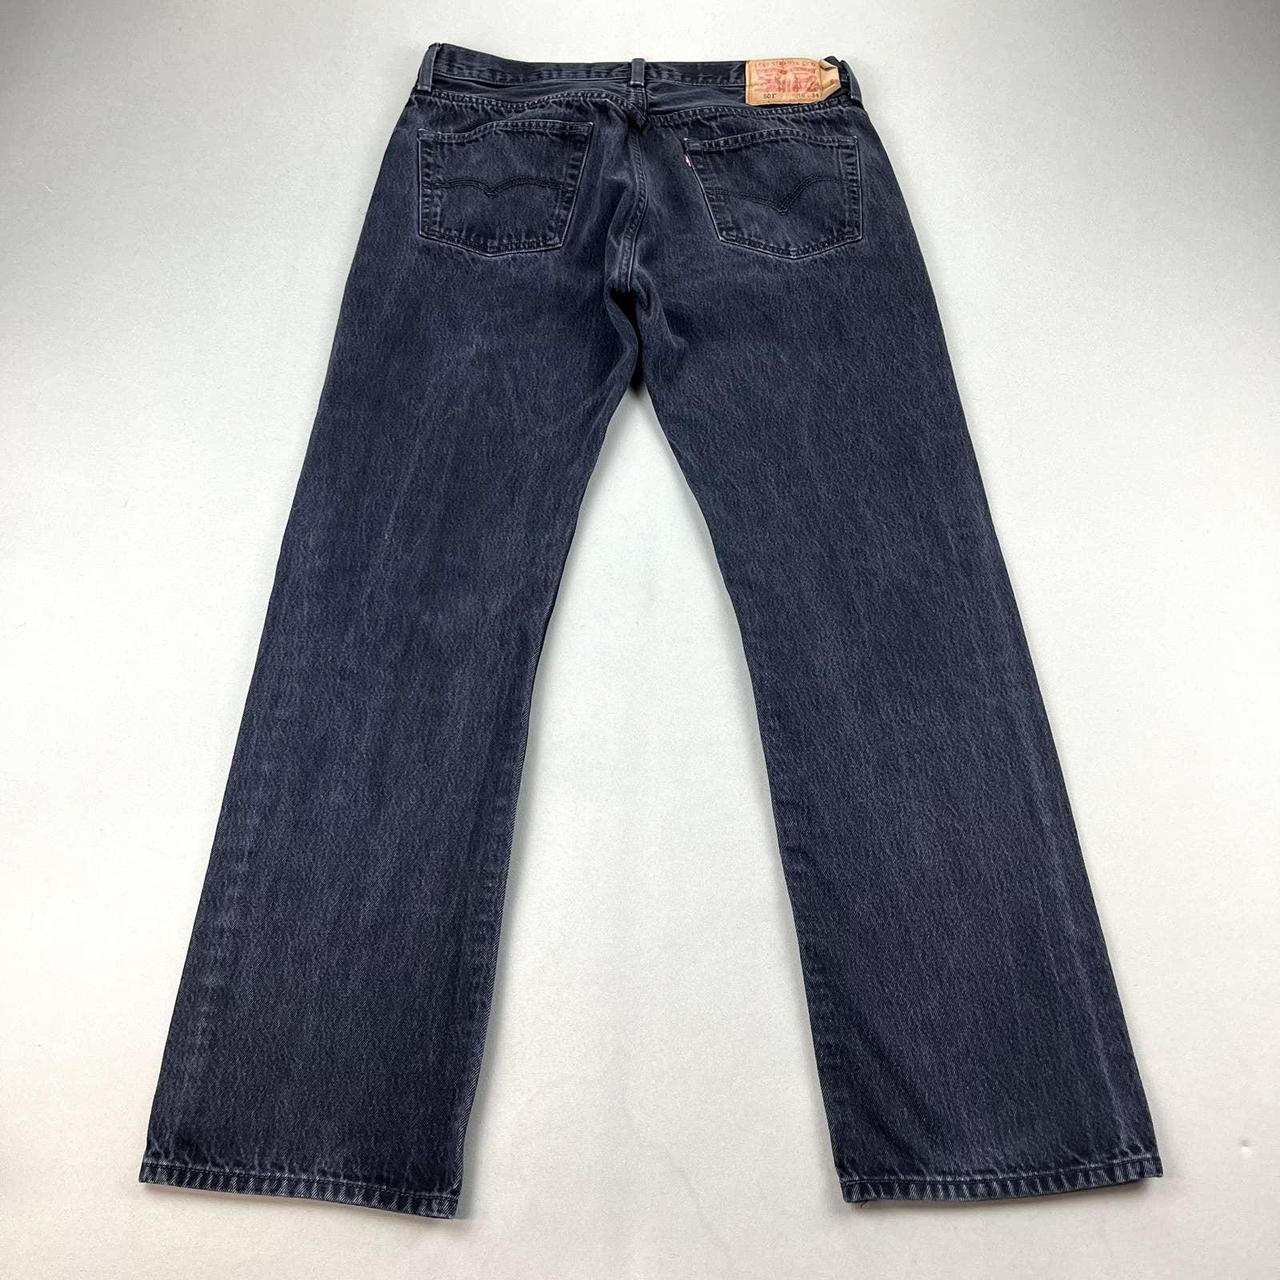 Levis 501 Jeans Mens 36x34 Black Denim Original Fit... - Depop